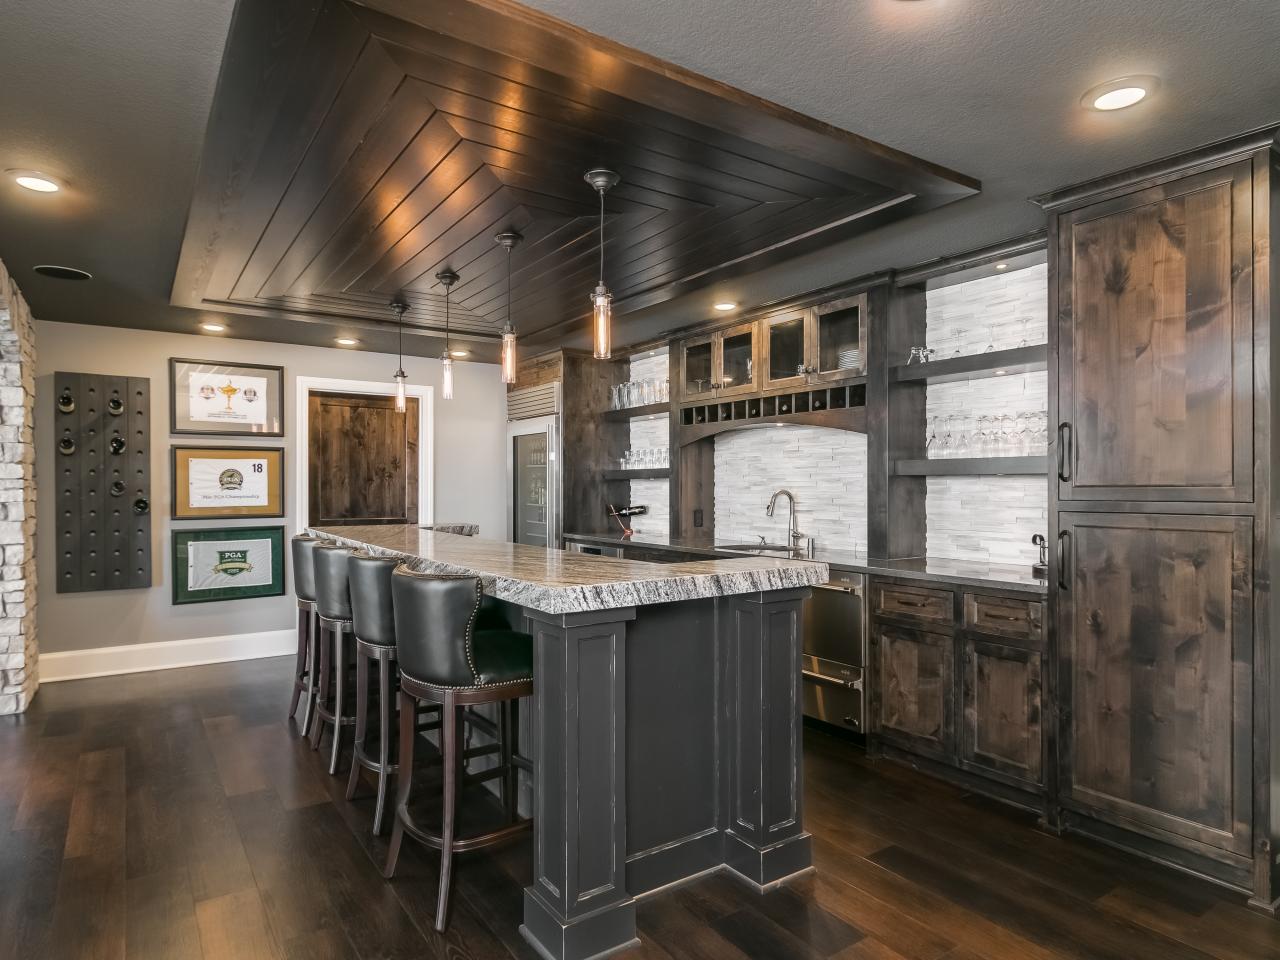 Make the Most of Your Small Kitchen Design - Denver Interior Design